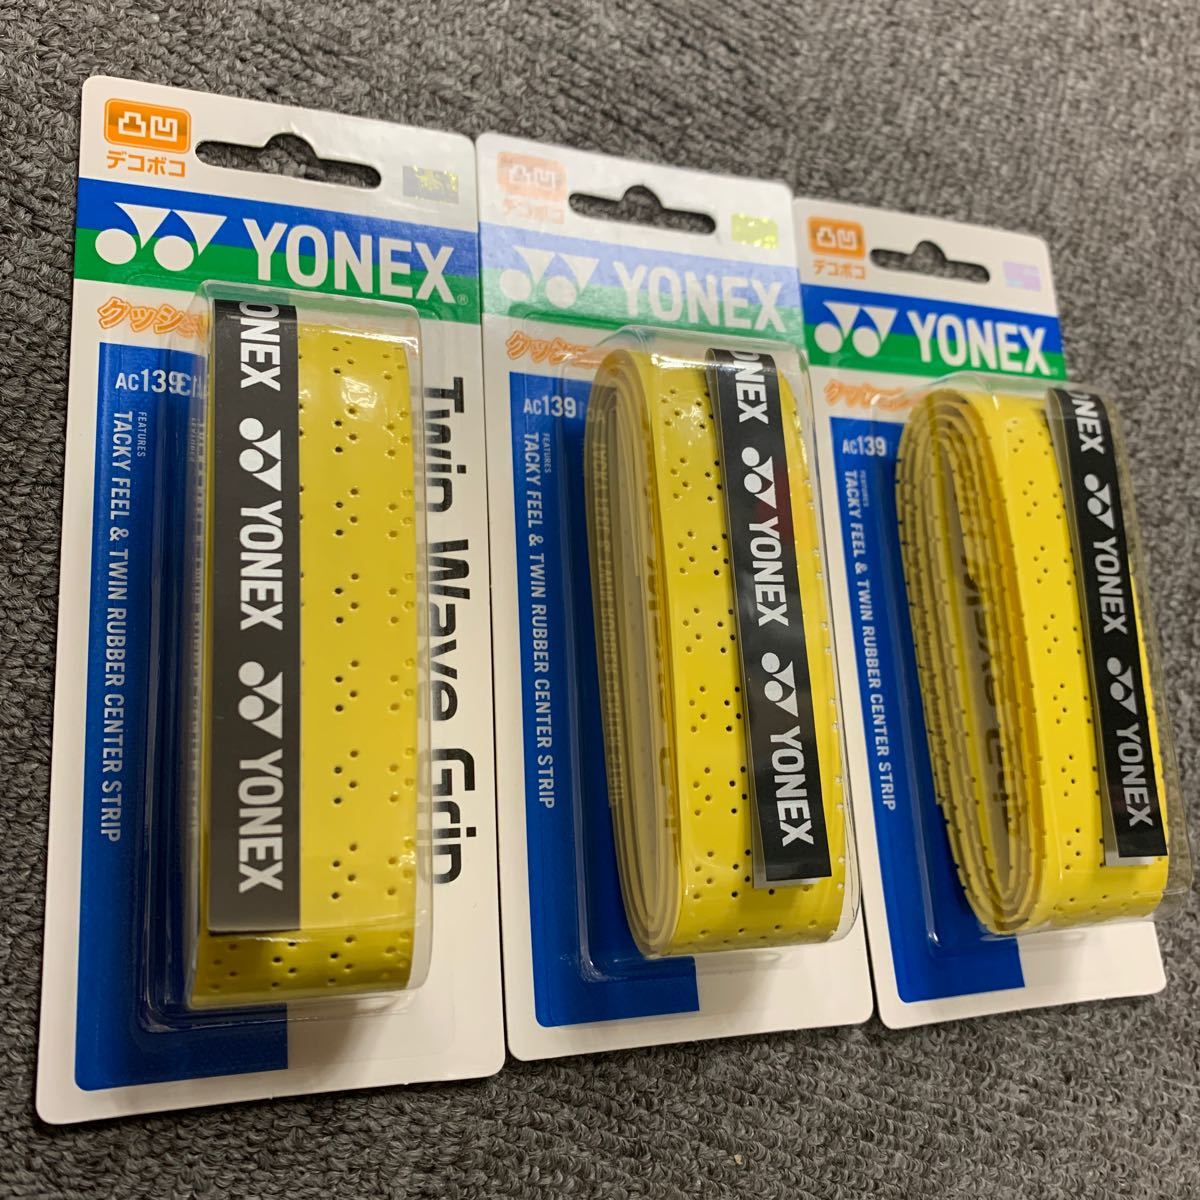 # Yonex twin wave grip AC139 [1 pcs insertion ] citrus yellow ×3 piece set ②